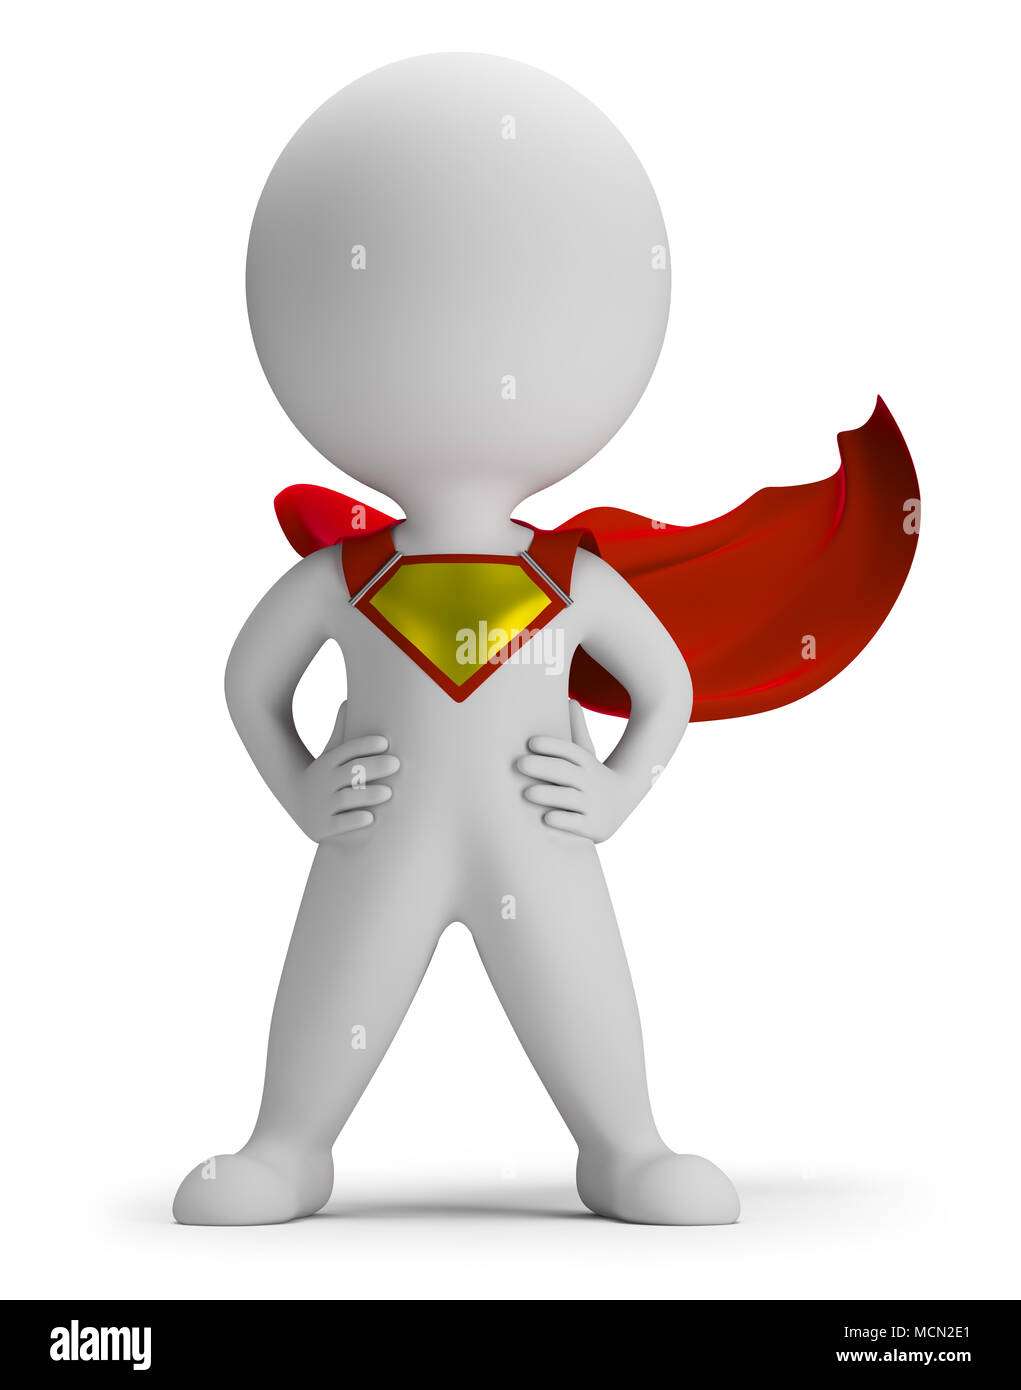 Free: Man superhero superhero standing icon in flat vector image - nohat.cc